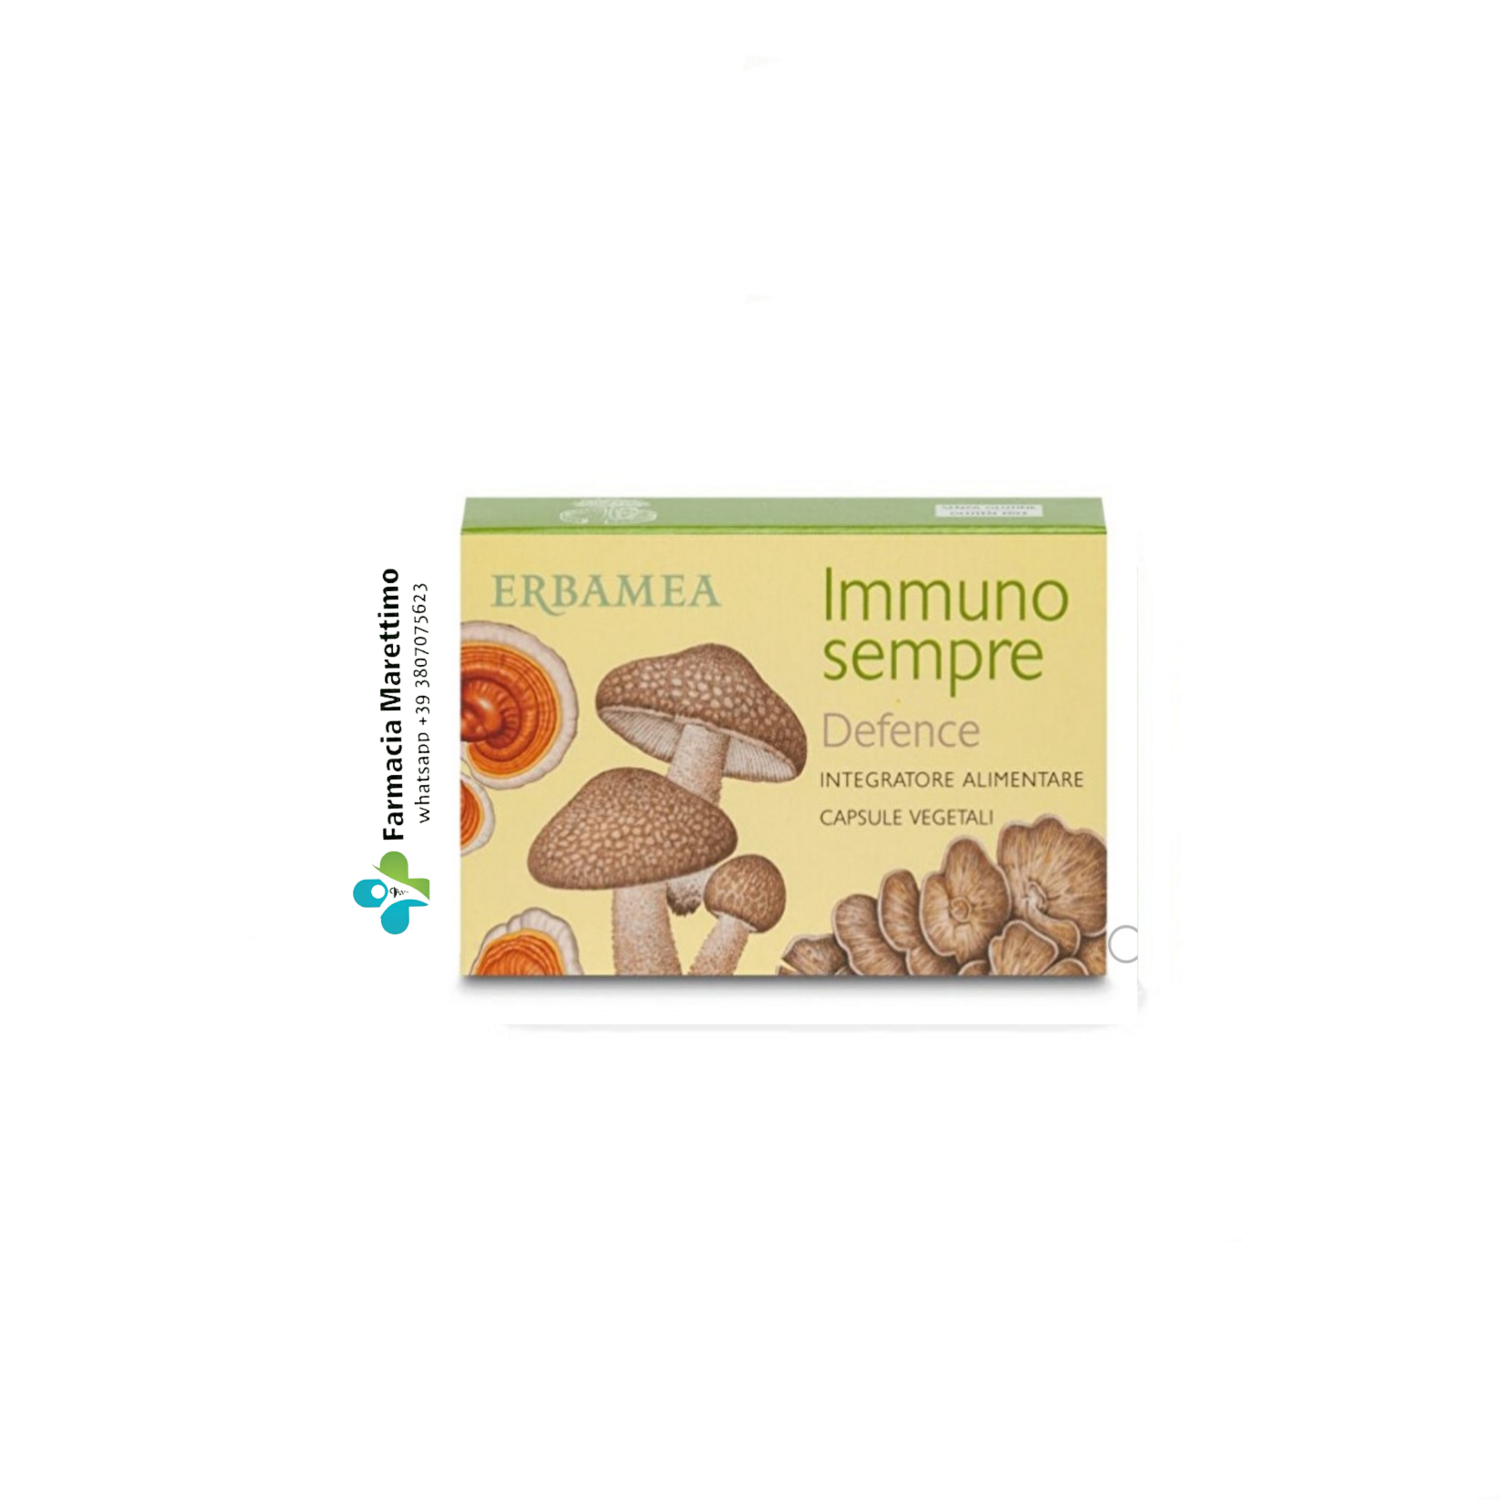 Erbamea Immunosempre 30cpr coadiuvante naturale del sistema immunitario.